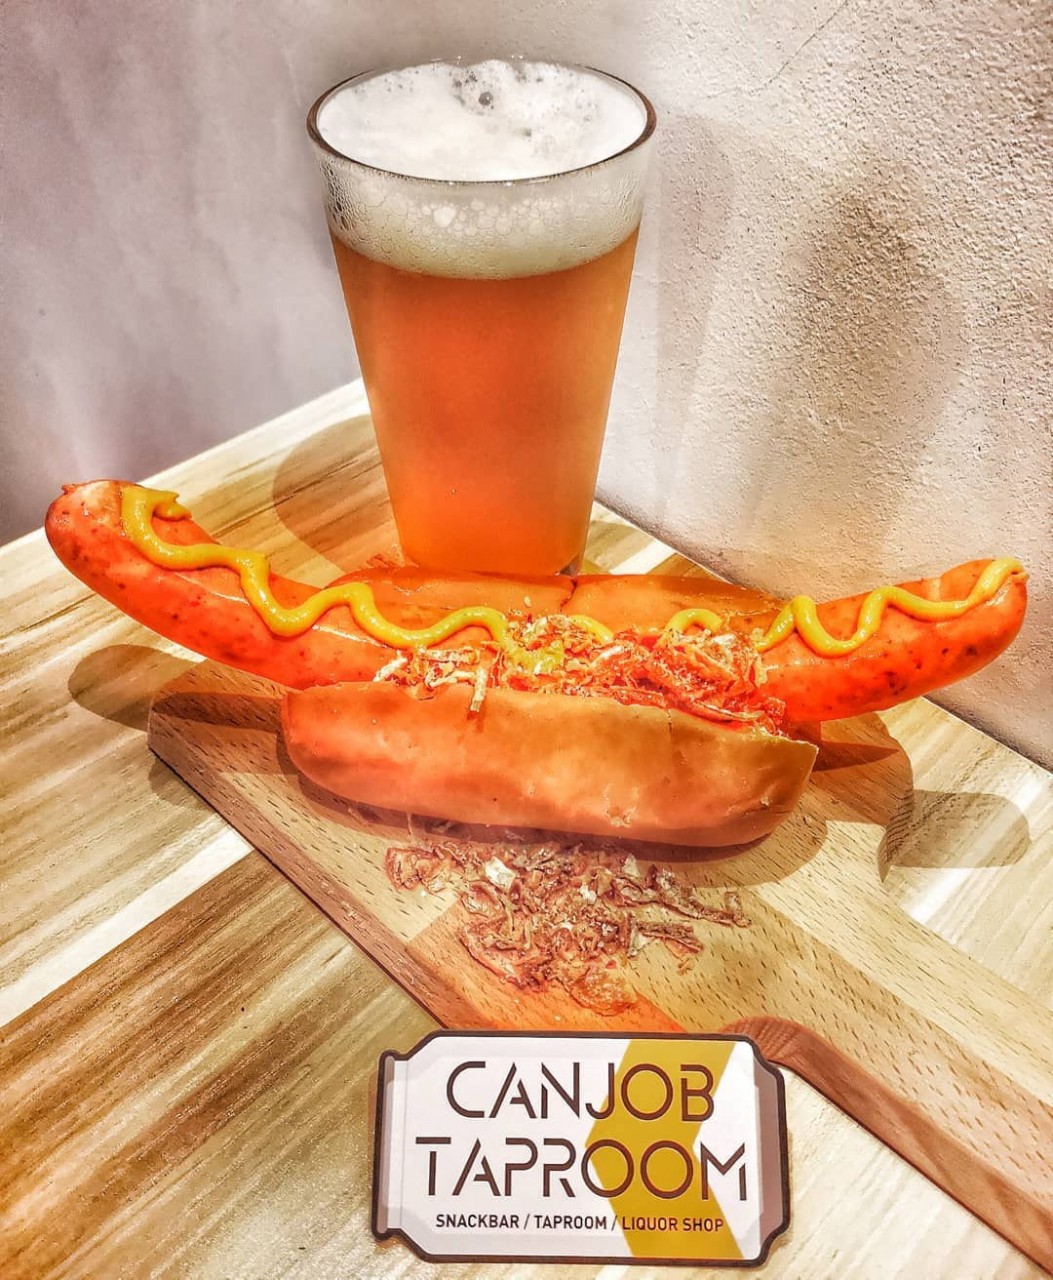 canjob taproom hotdogs 